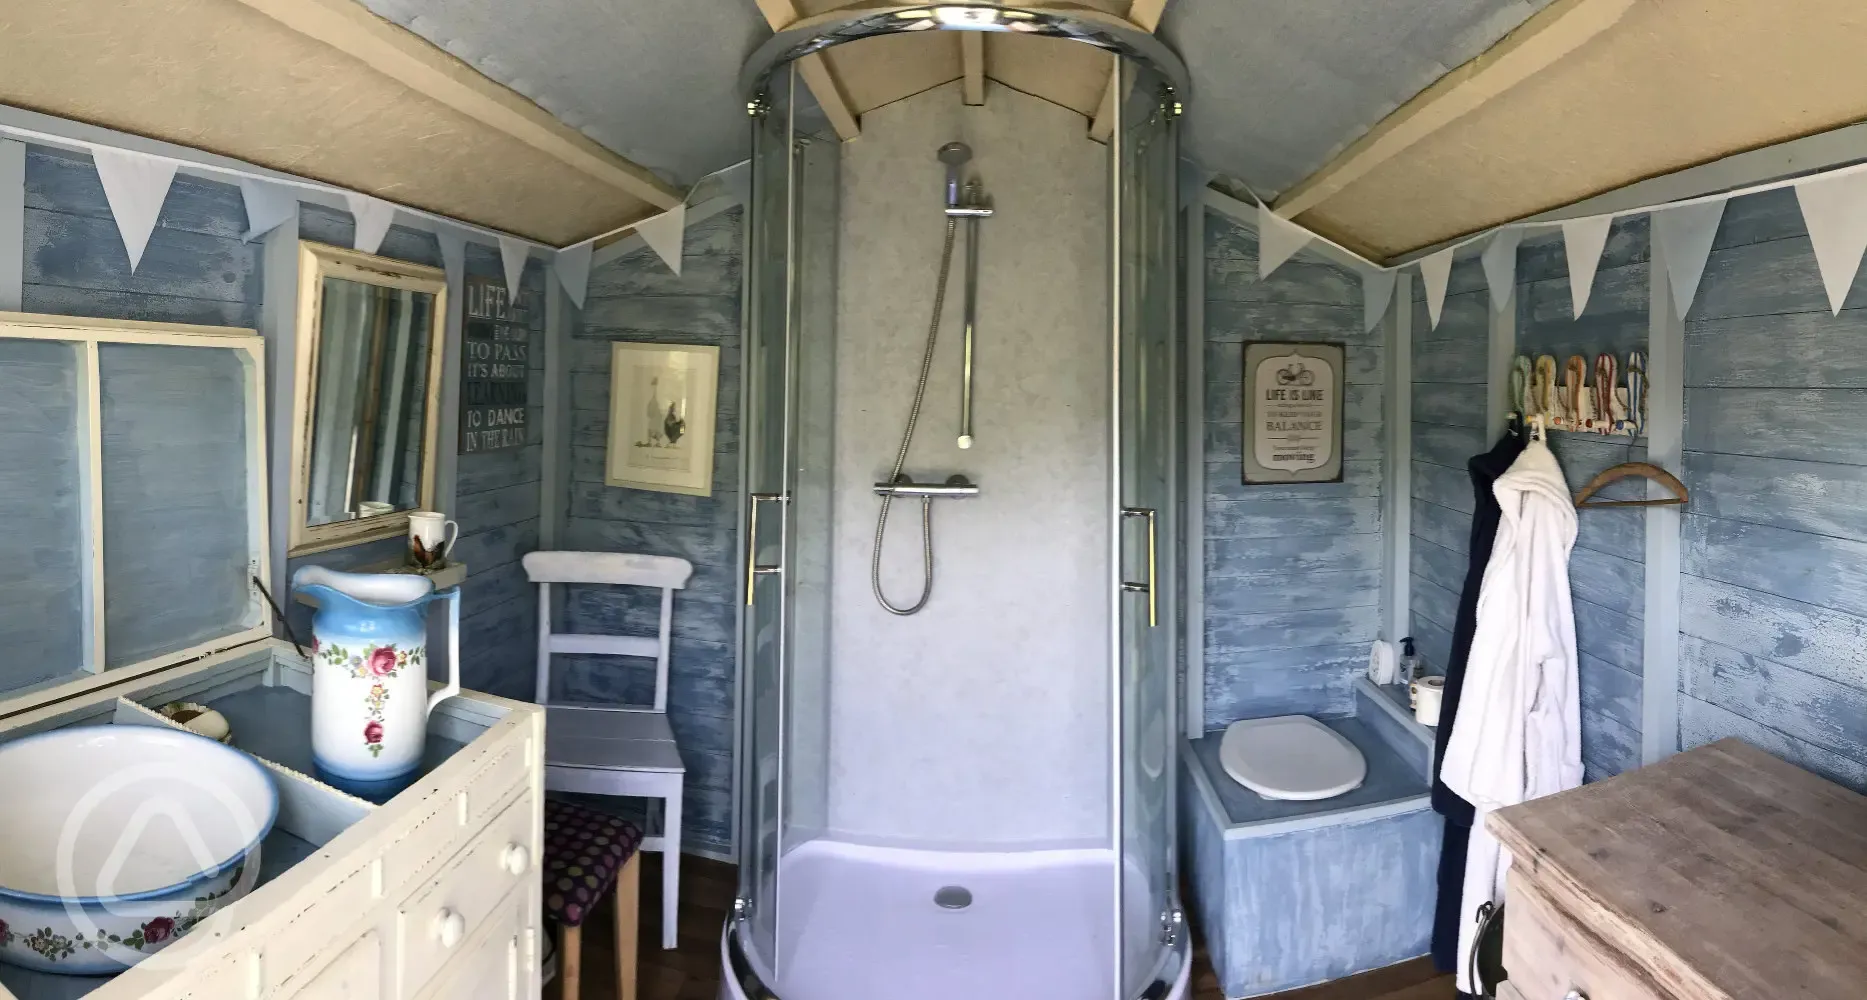 Inside the Bathroom Hut